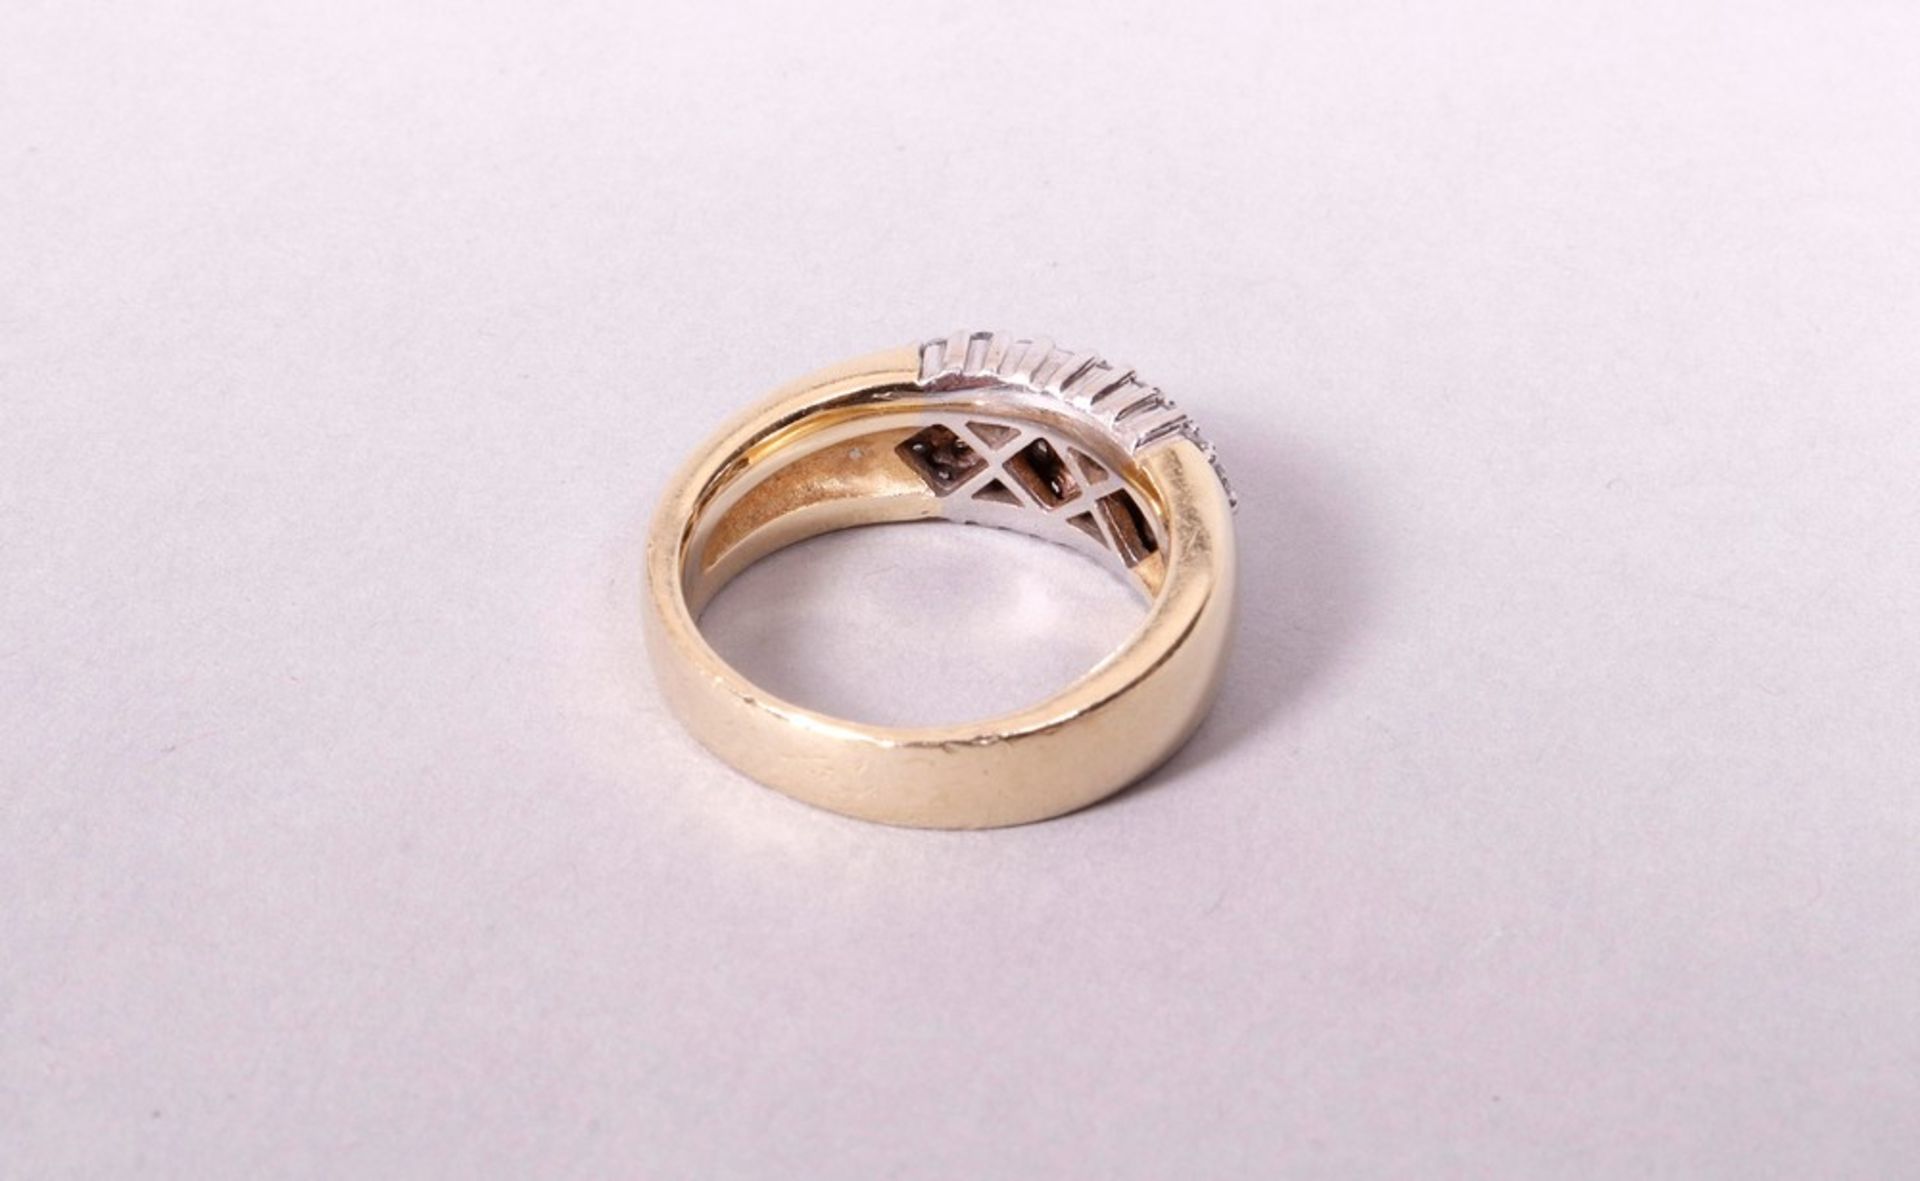 Band ring, 585 GG - Image 4 of 6